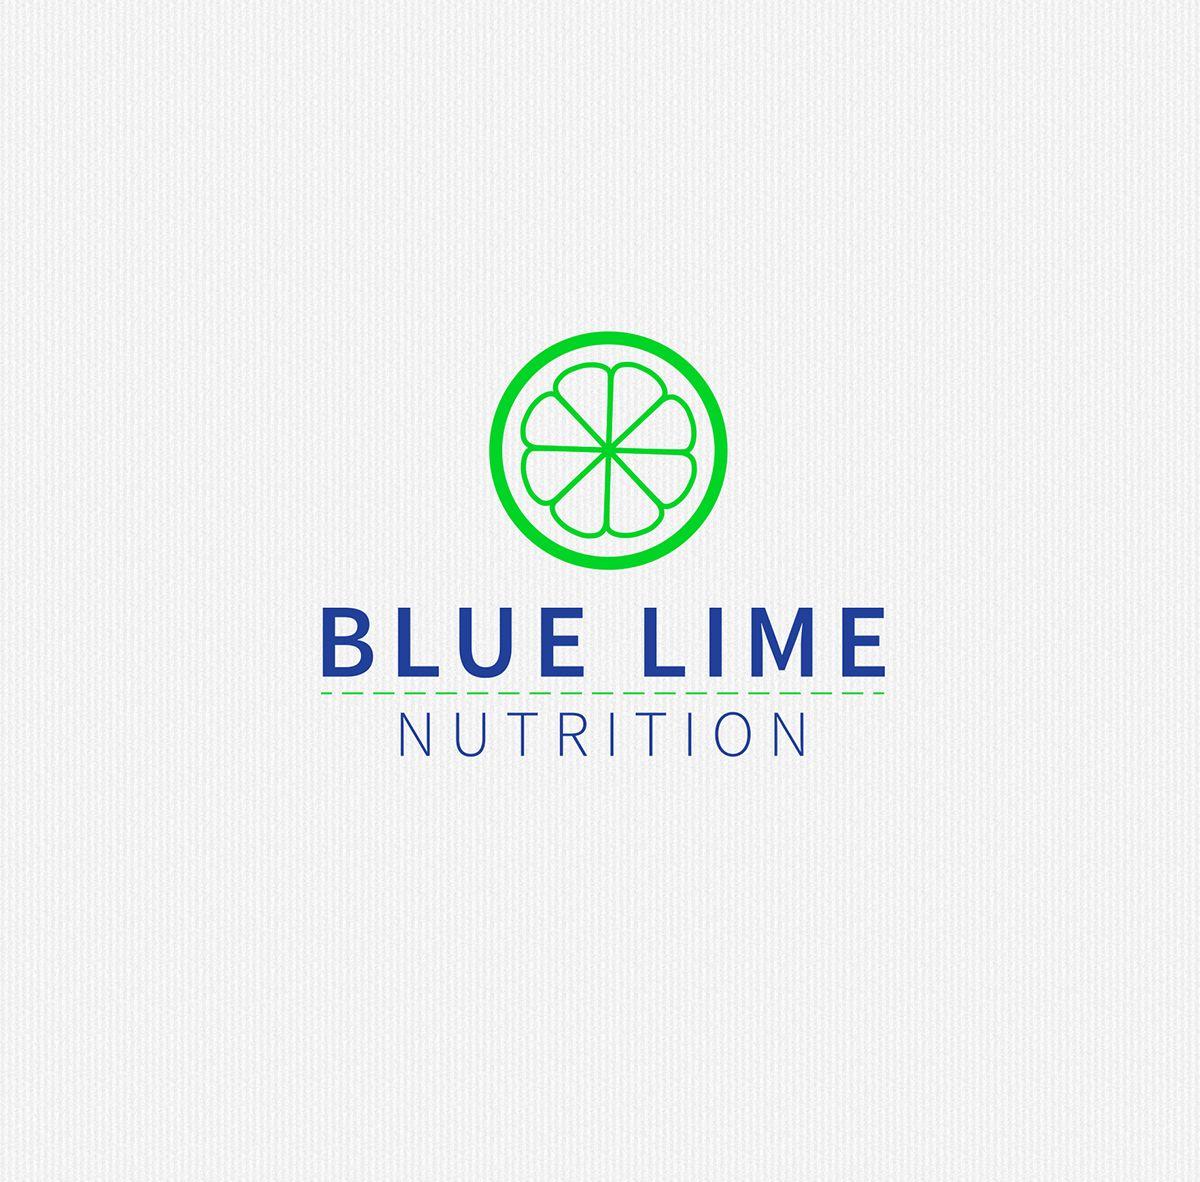 Lime and Blue Logo - Professional, Upmarket, Business Logo Design for Blue Lime Nutrition